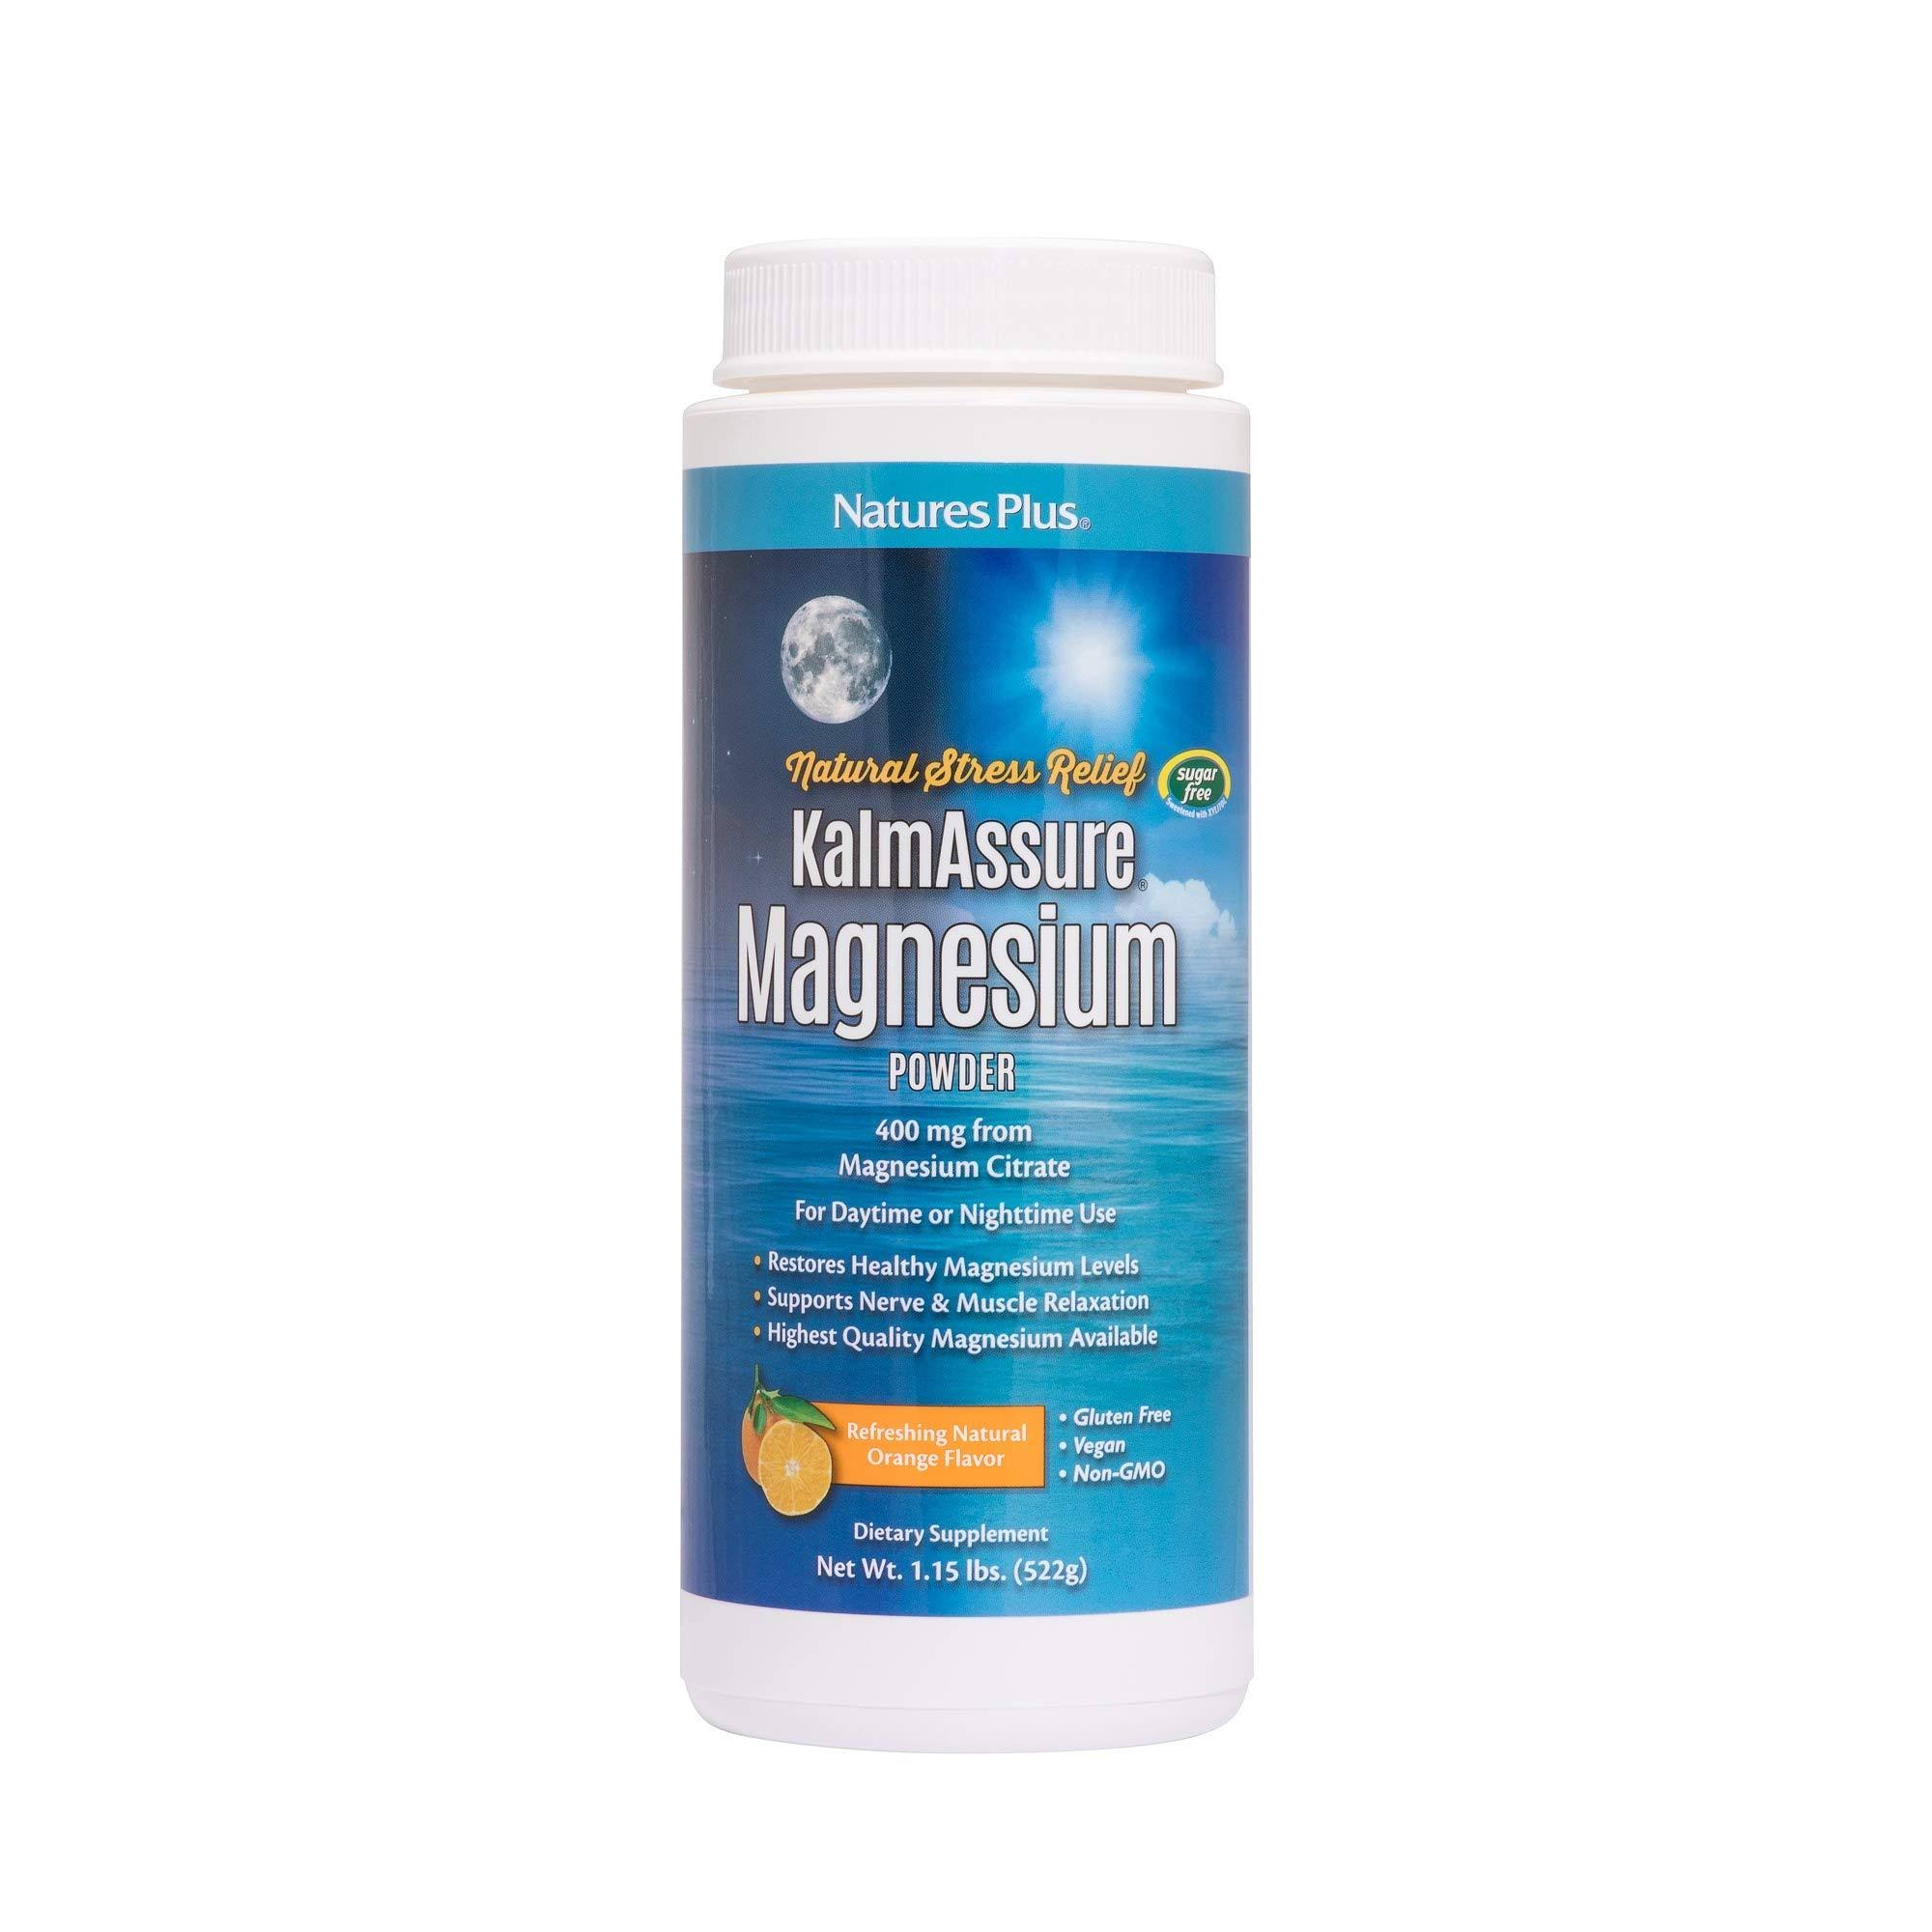 Nature's Plus KalmAssure Magnesium Powder Supplement - Natural Orange, 400mg, 1.15lbs